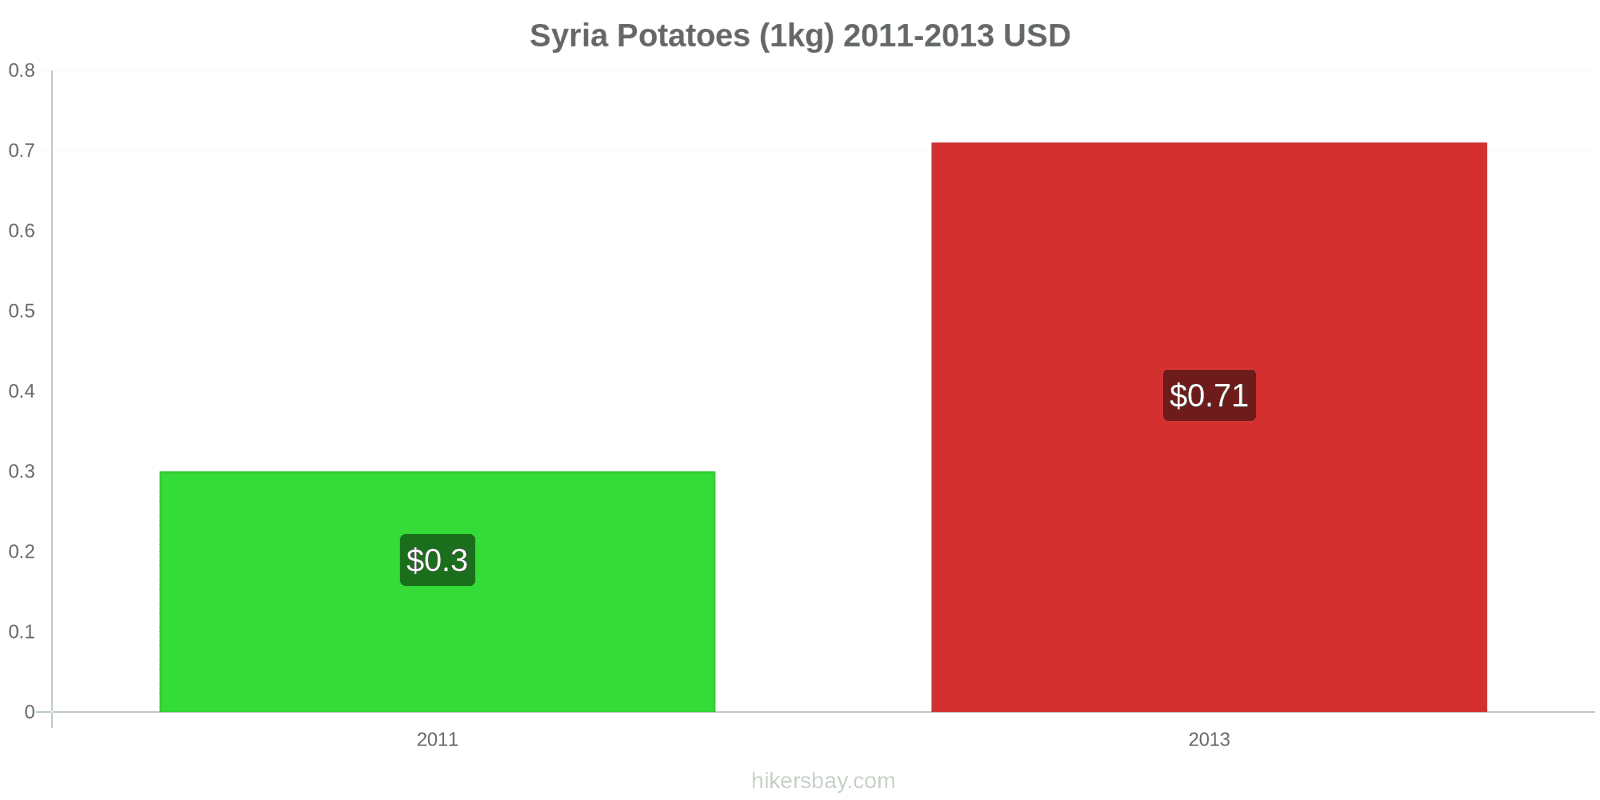 Syria price changes Potatoes (1kg) hikersbay.com